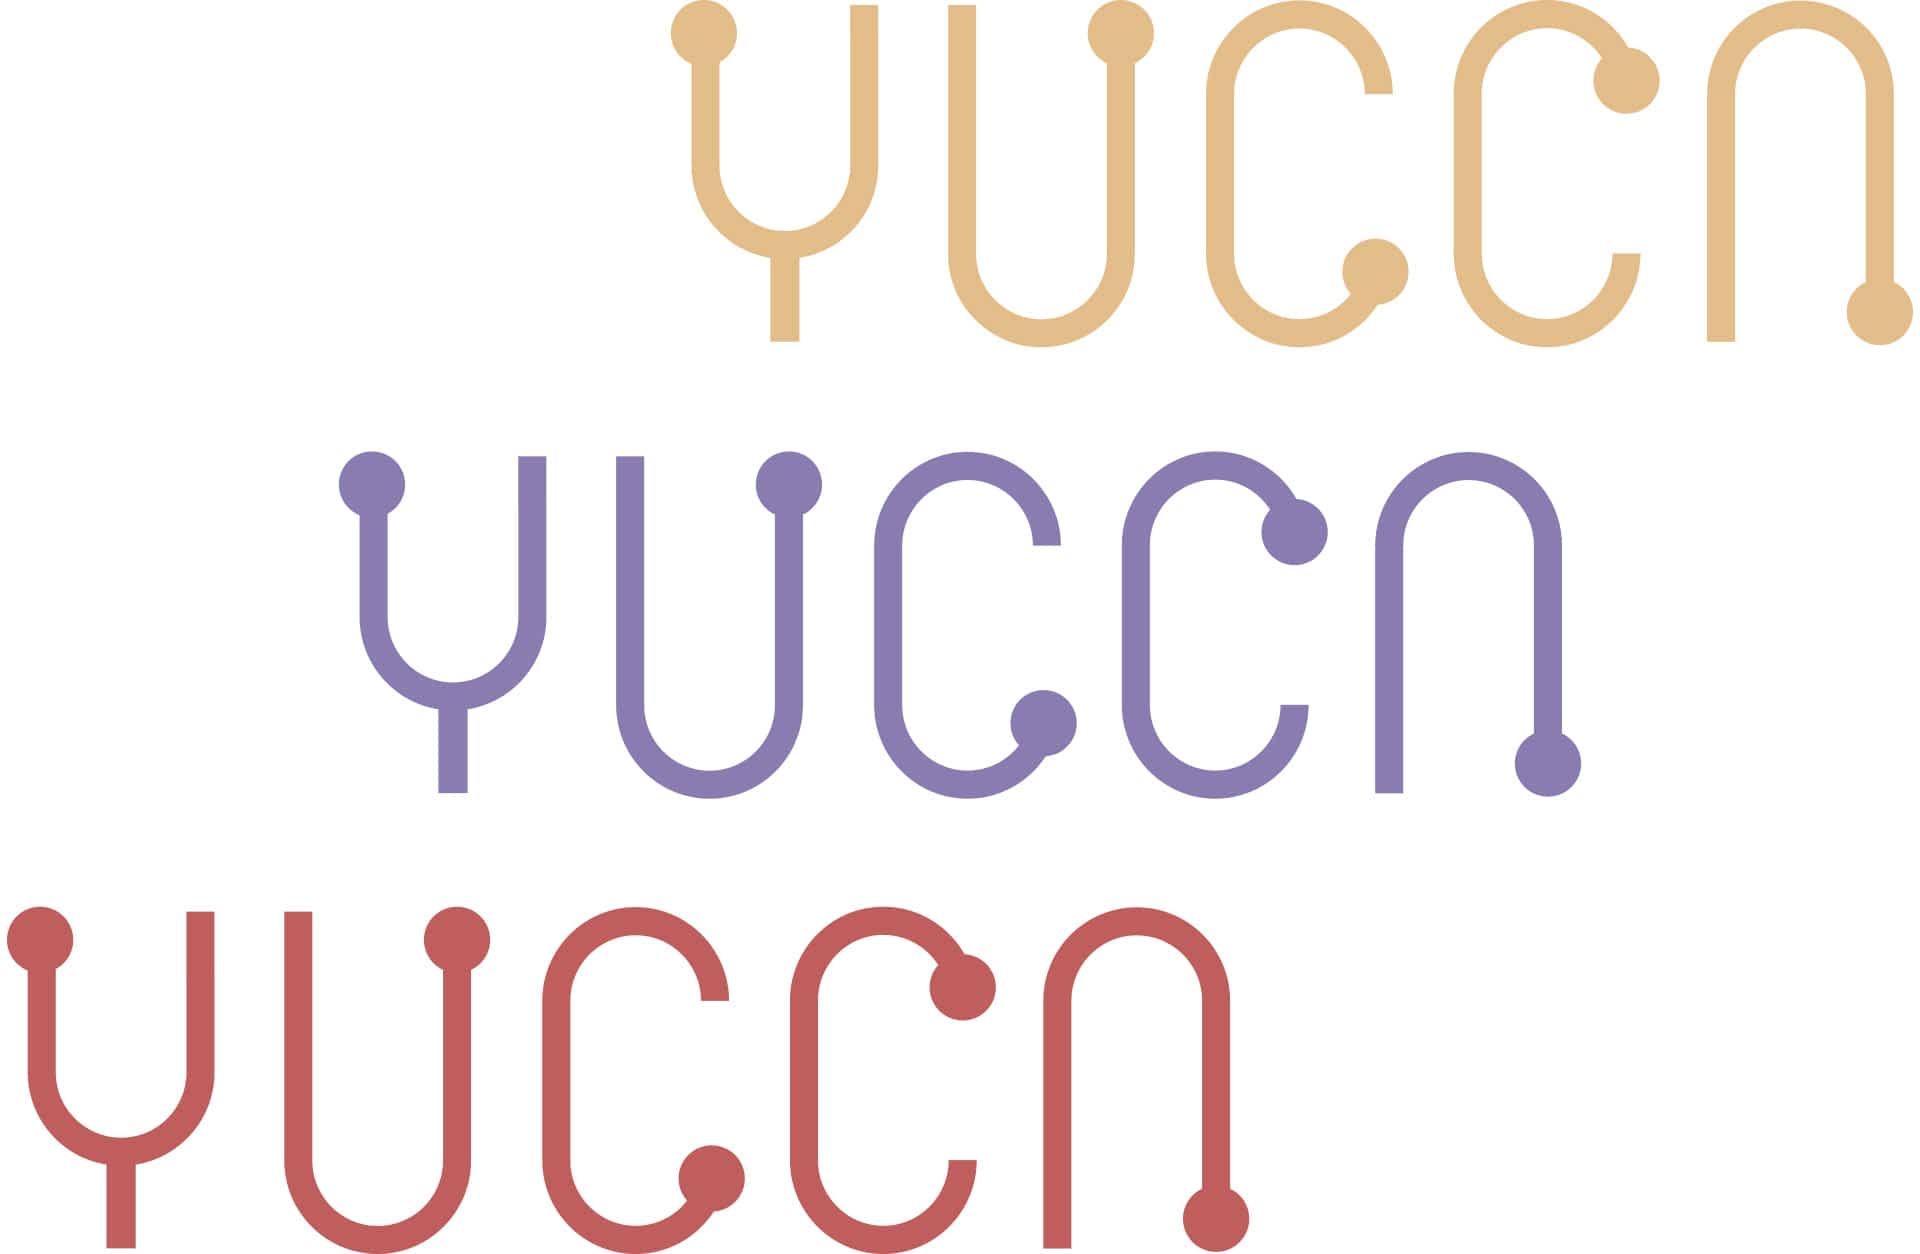 Alice_Stivala_Visual_Designer_Yucca_logotipo_4